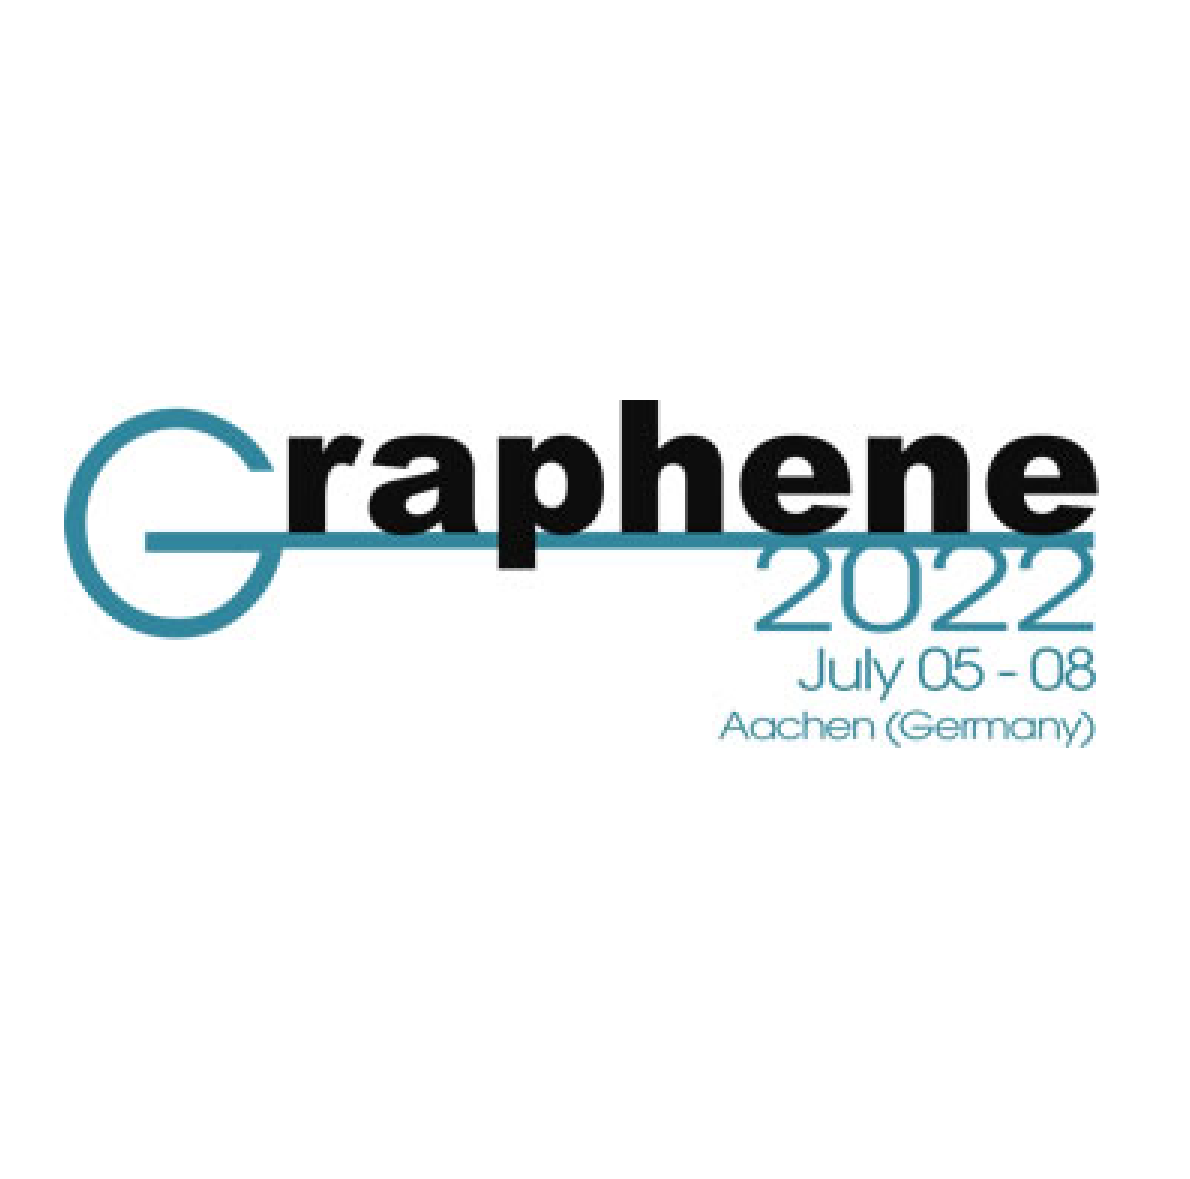 Graphene 2022